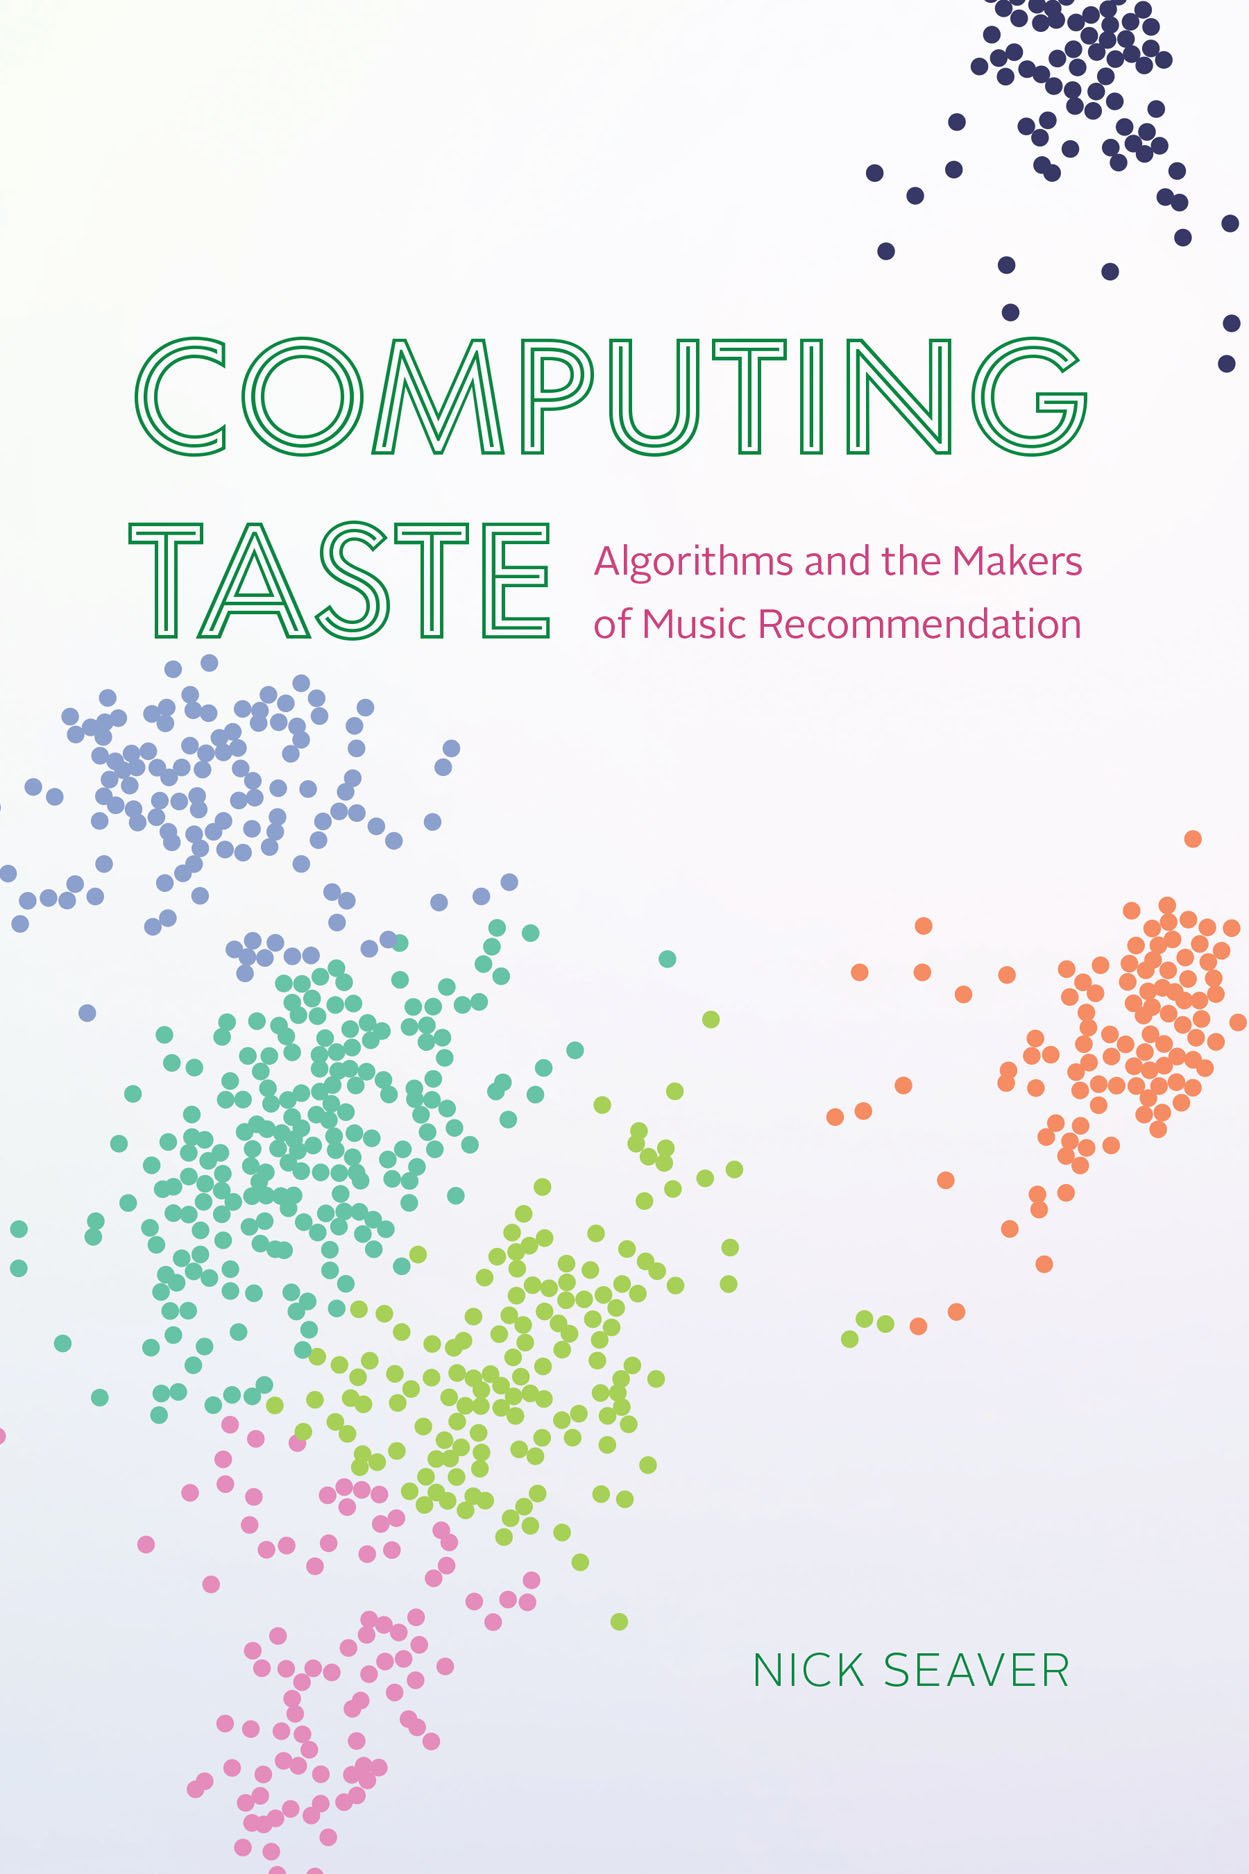 Computing Taste by Nick Seaver